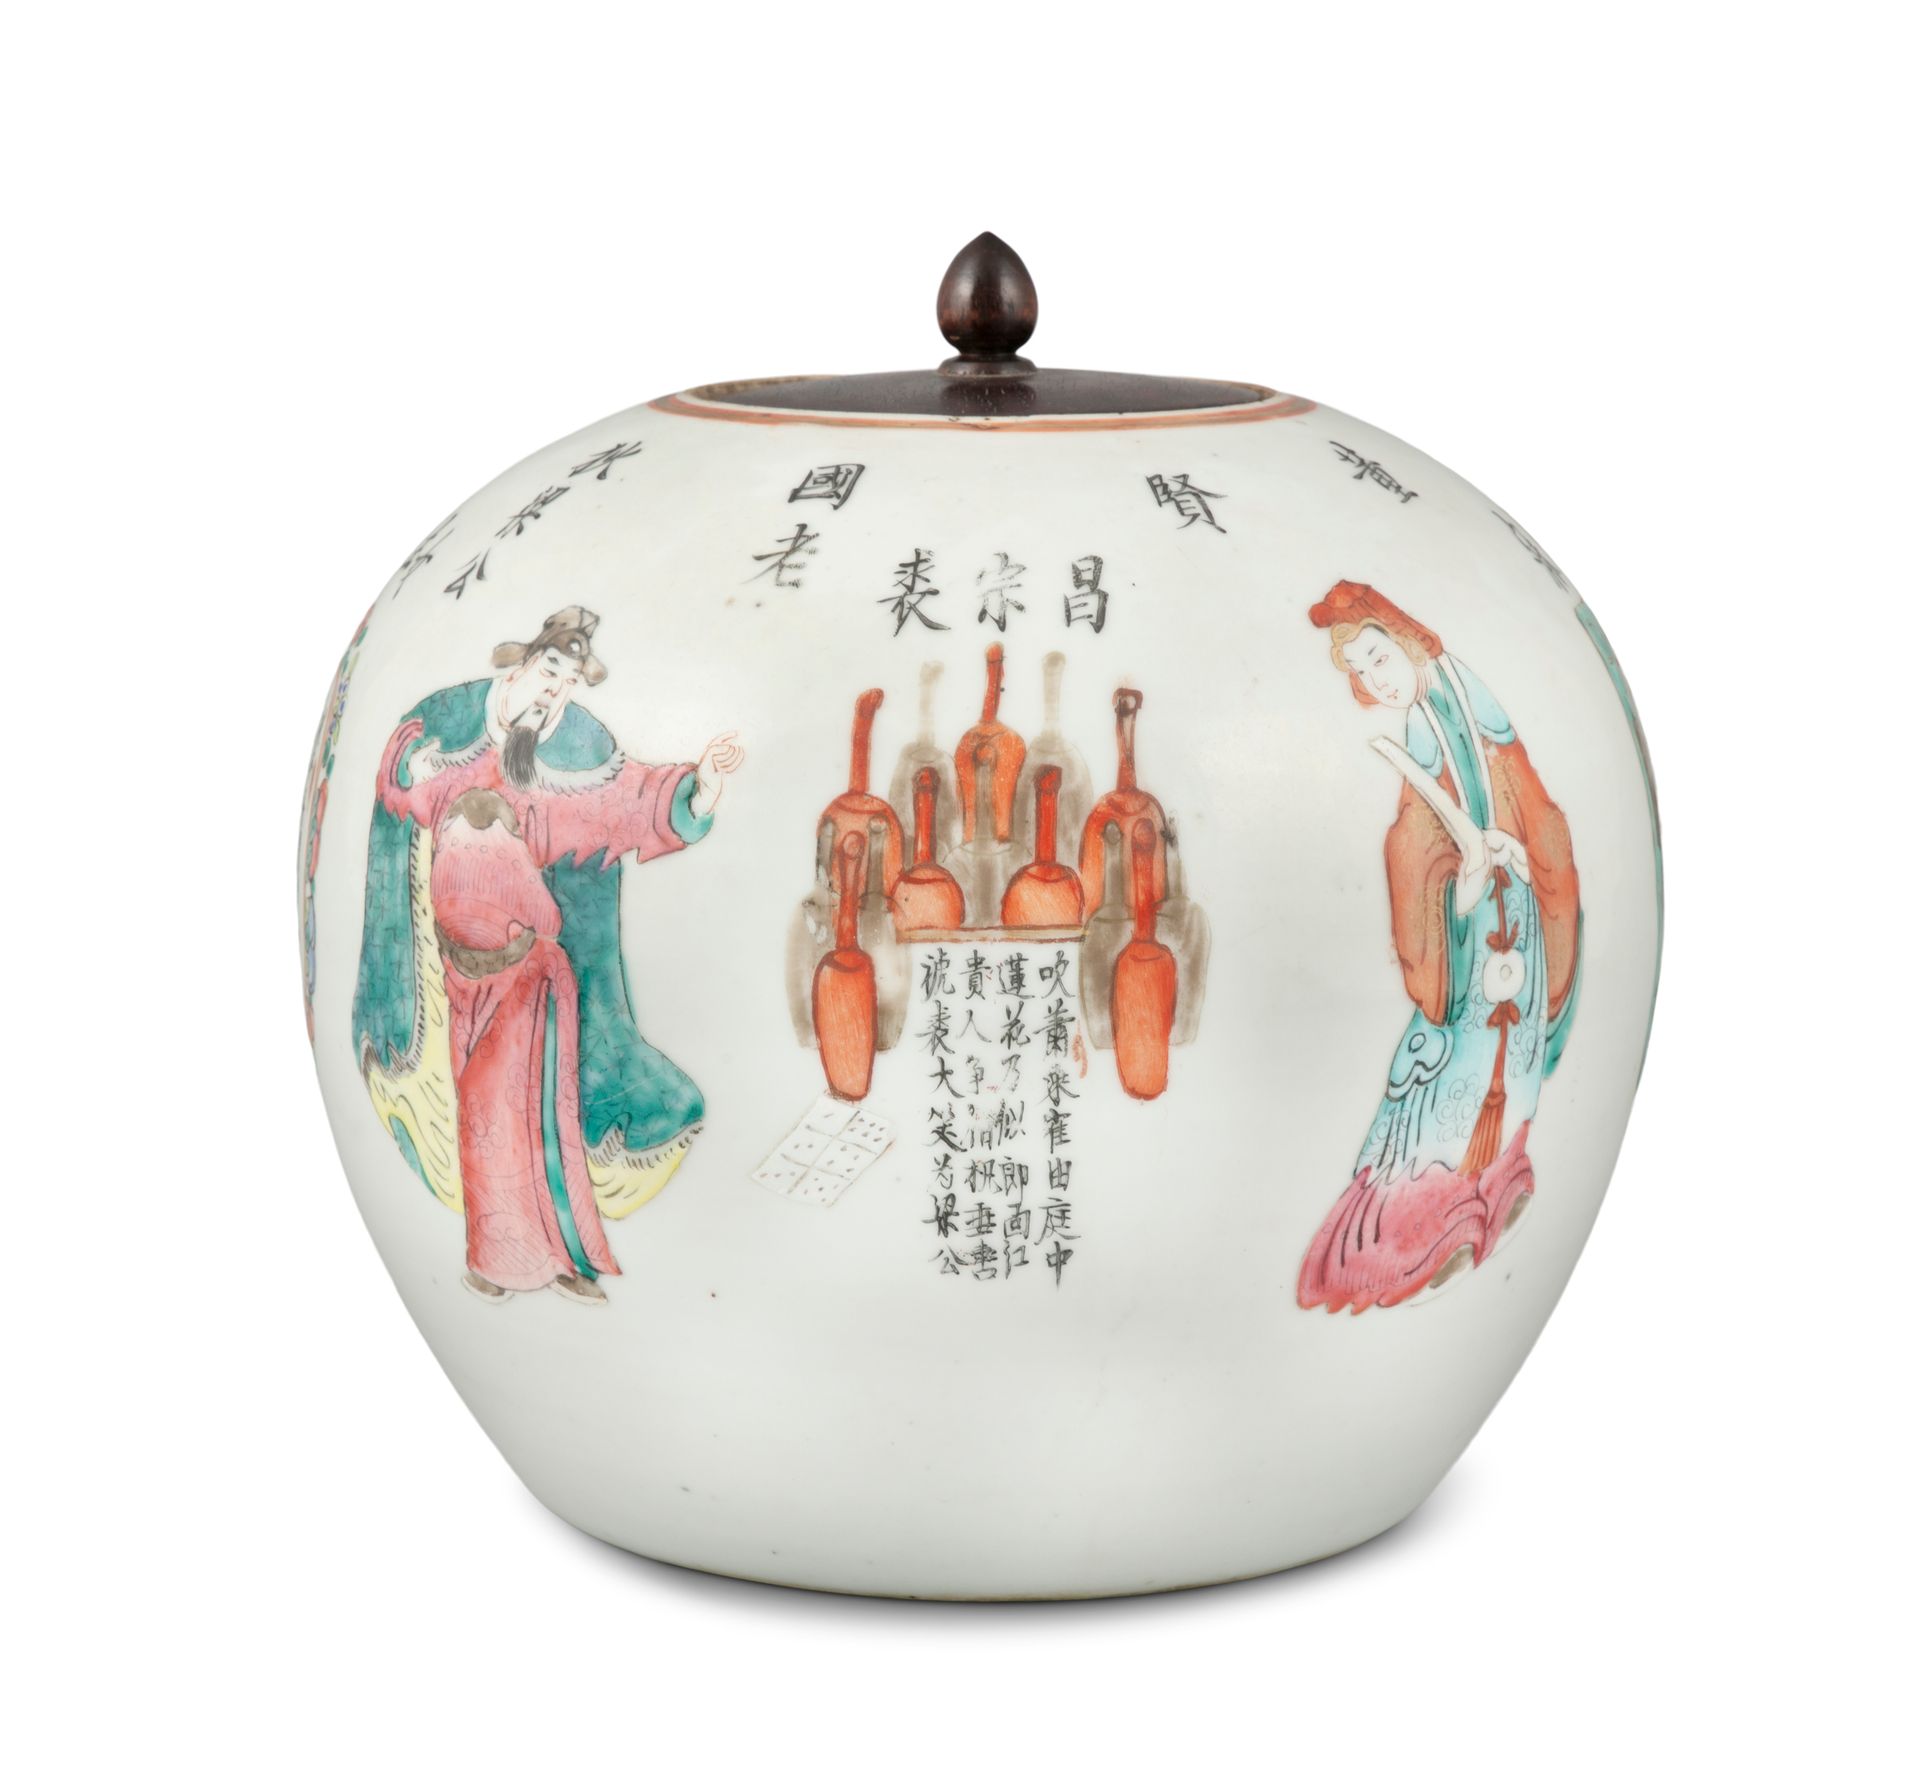 Null 一件粉彩 "吴双浦 "瓷罐 中国，清朝，19世纪 以粉彩装饰 "无双表 "的四个英雄，其中还有书法。底部有一个旧的收藏家的法文标签，上面写着 "Plu&hellip;